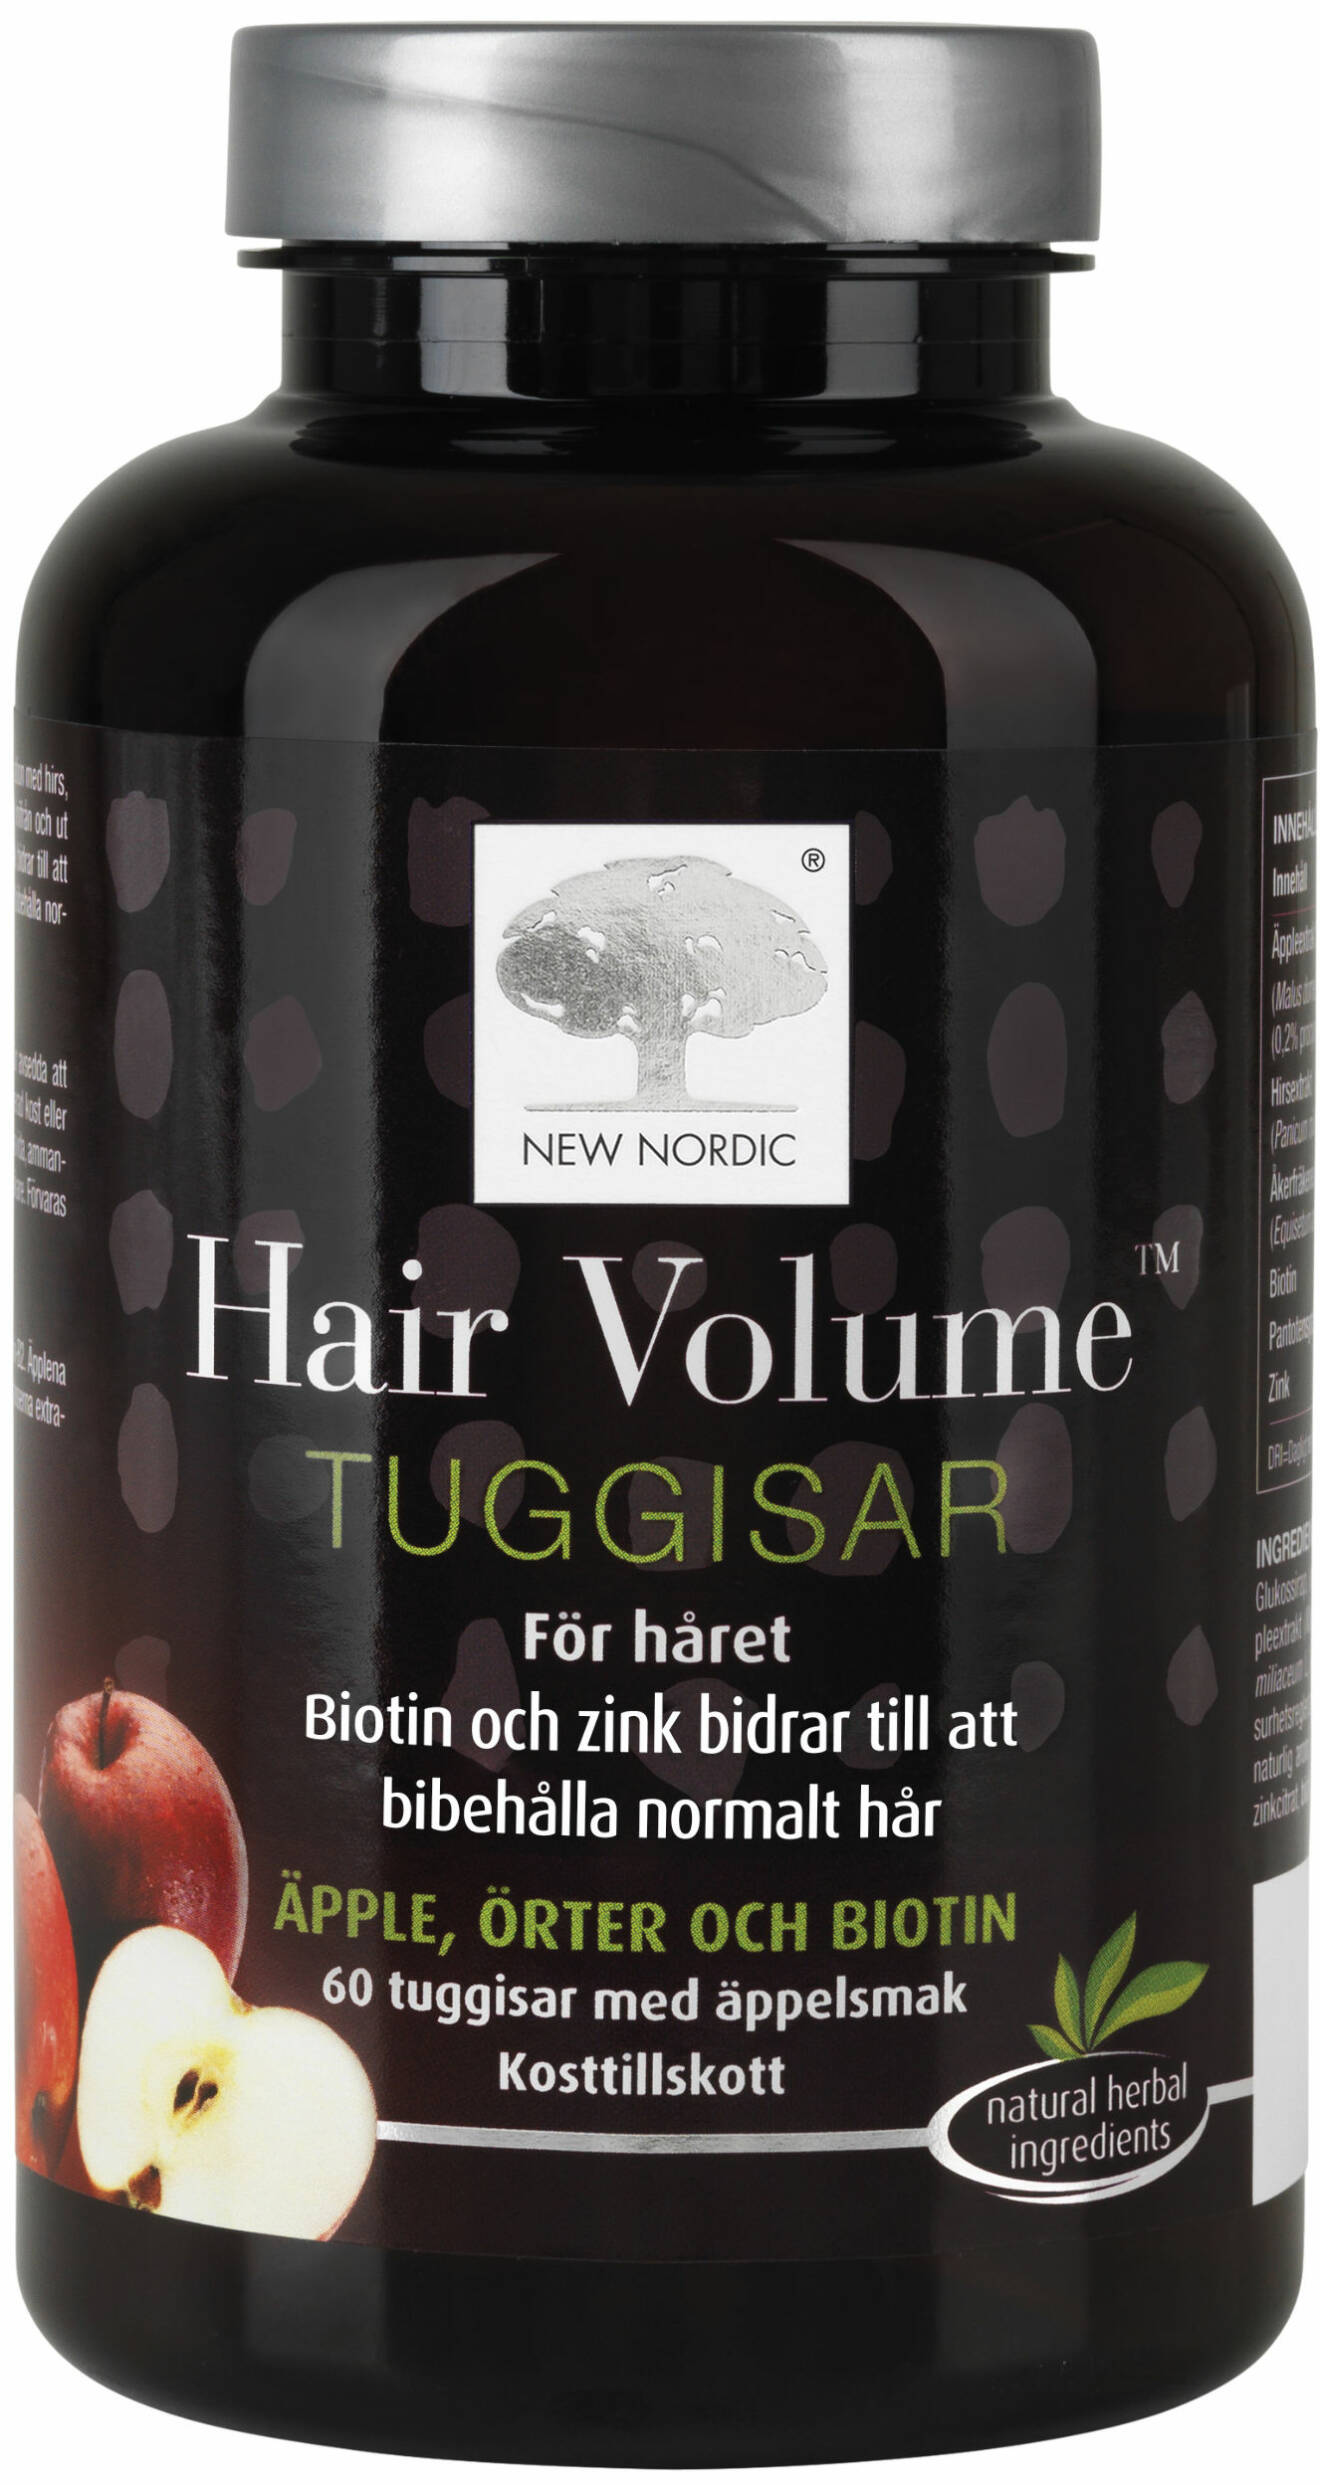 Hair volume tuggisar, New Nordic. 